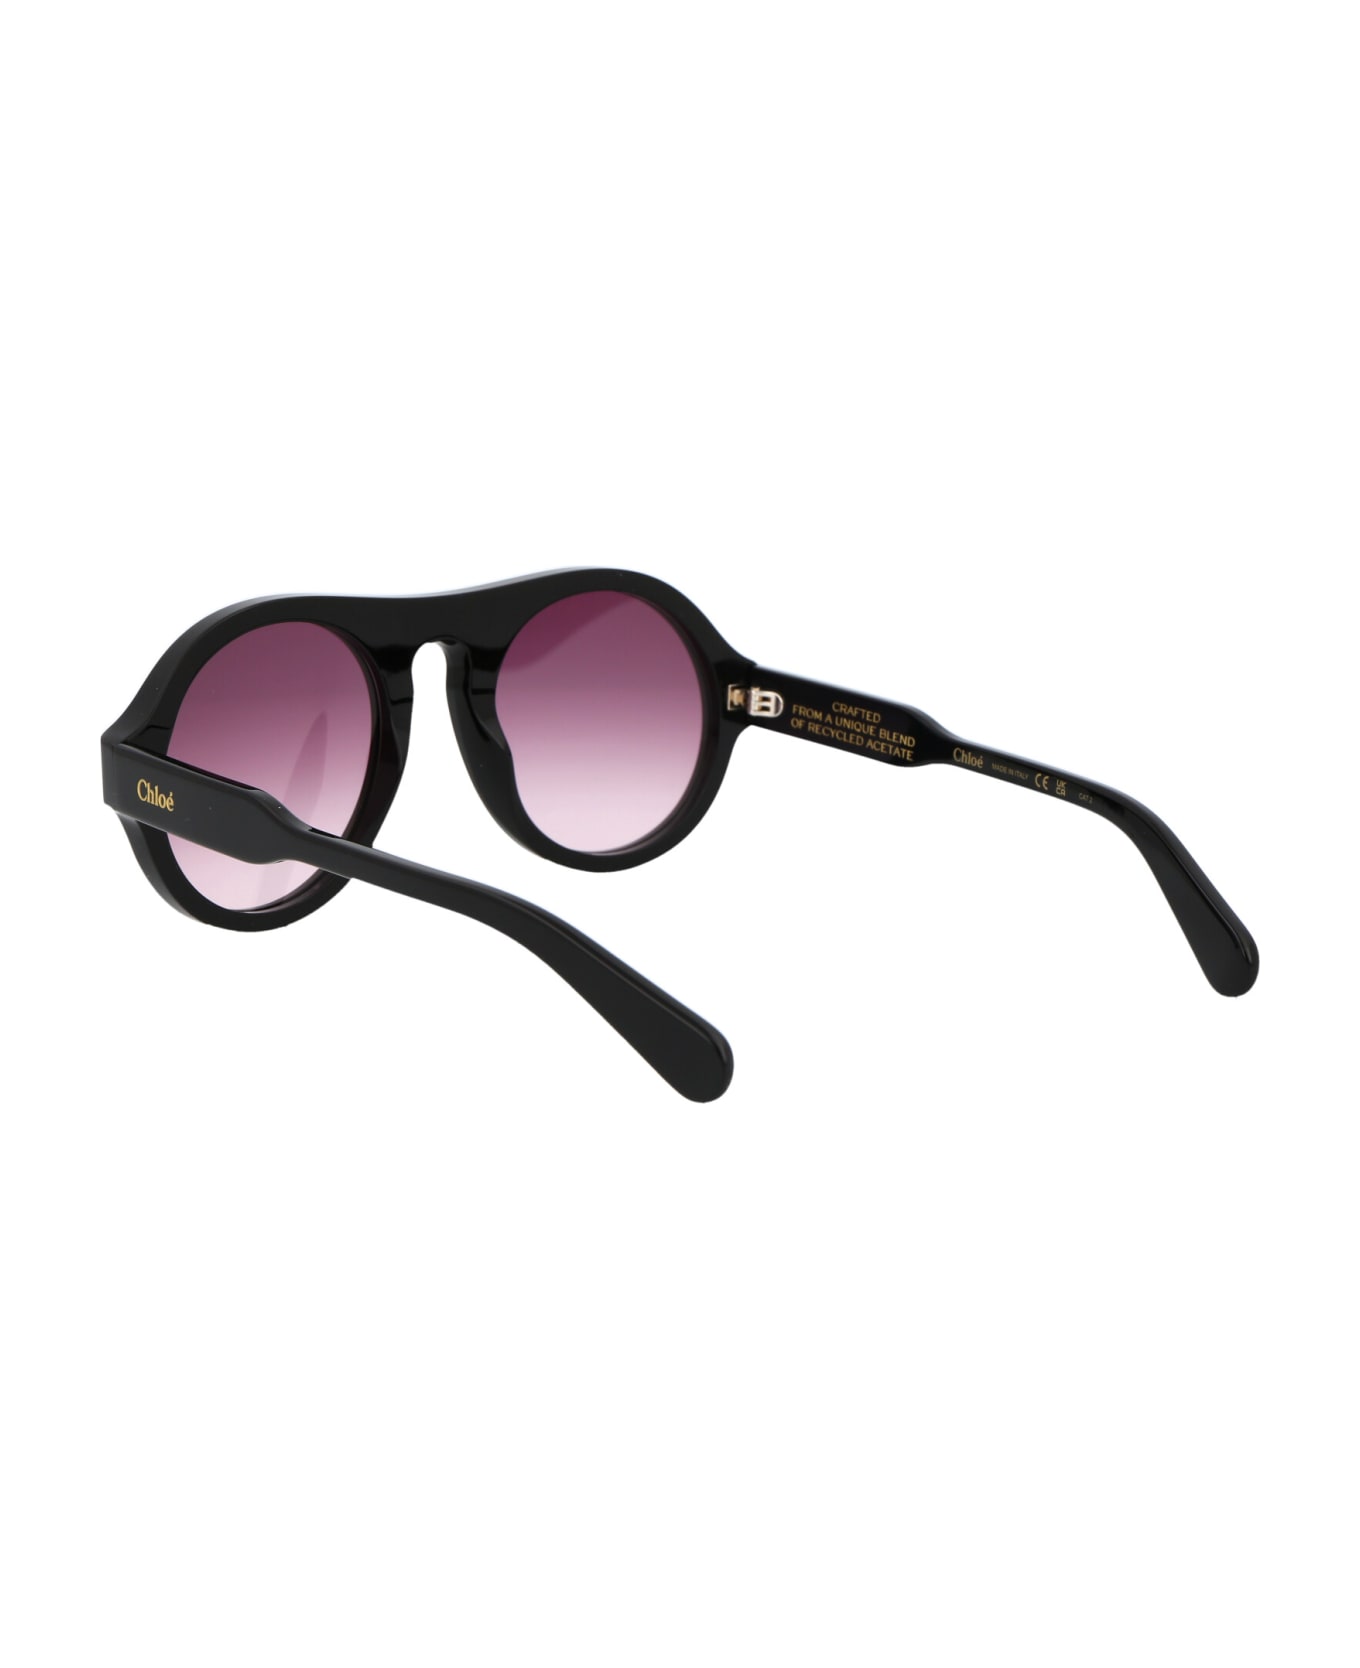 Chloé Eyewear Ch0151s Sunglasses - 001 BLACK BLACK RED サングラス